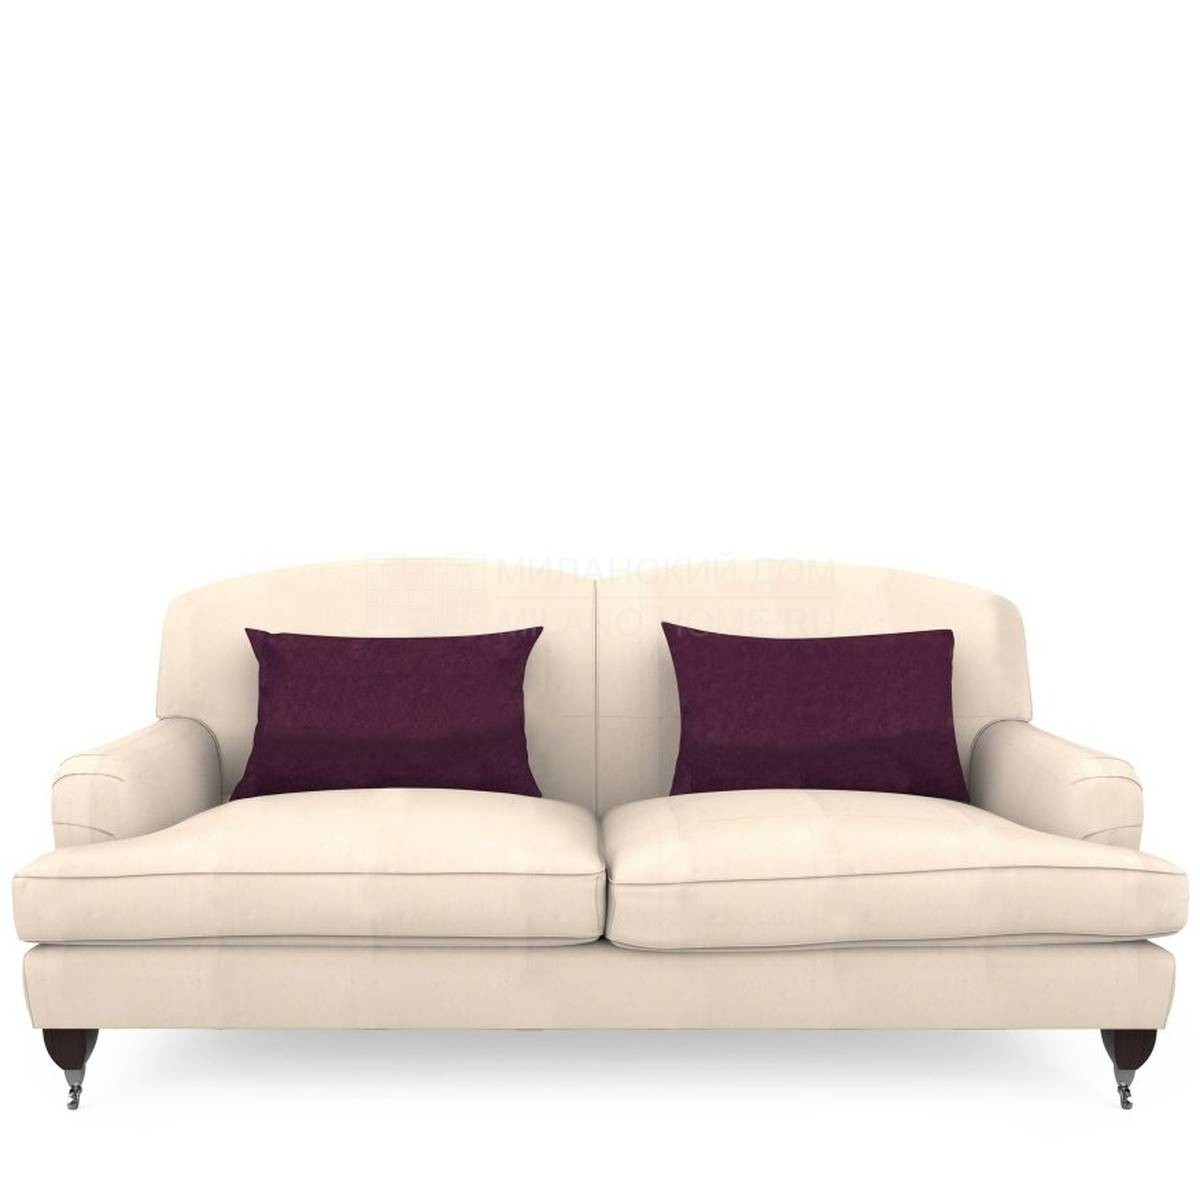 Прямой диван Gladiolus two seater sofa  из Италии фабрики MARIONI